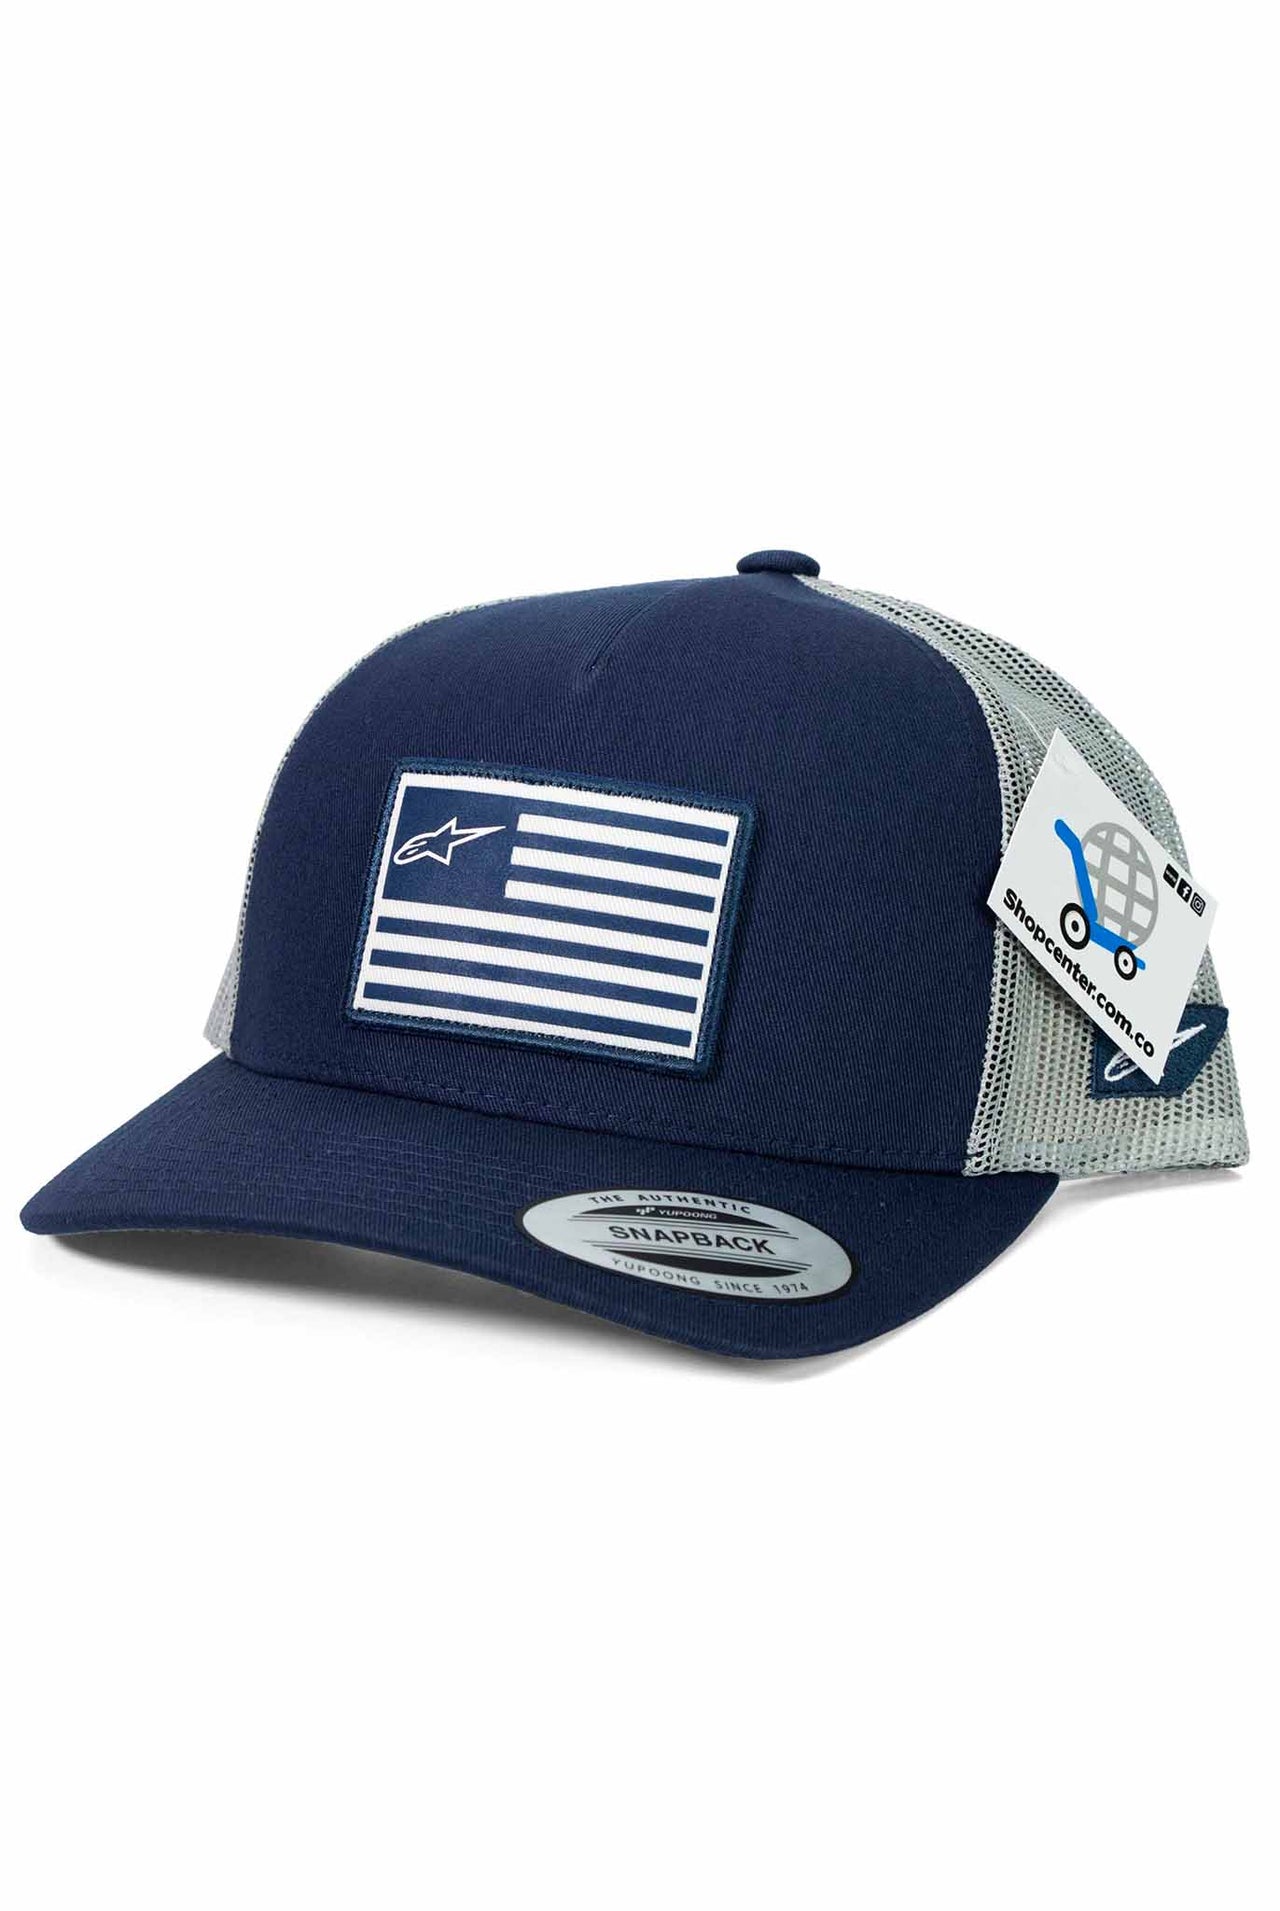 Gorra Alpinestars flag snapback hat